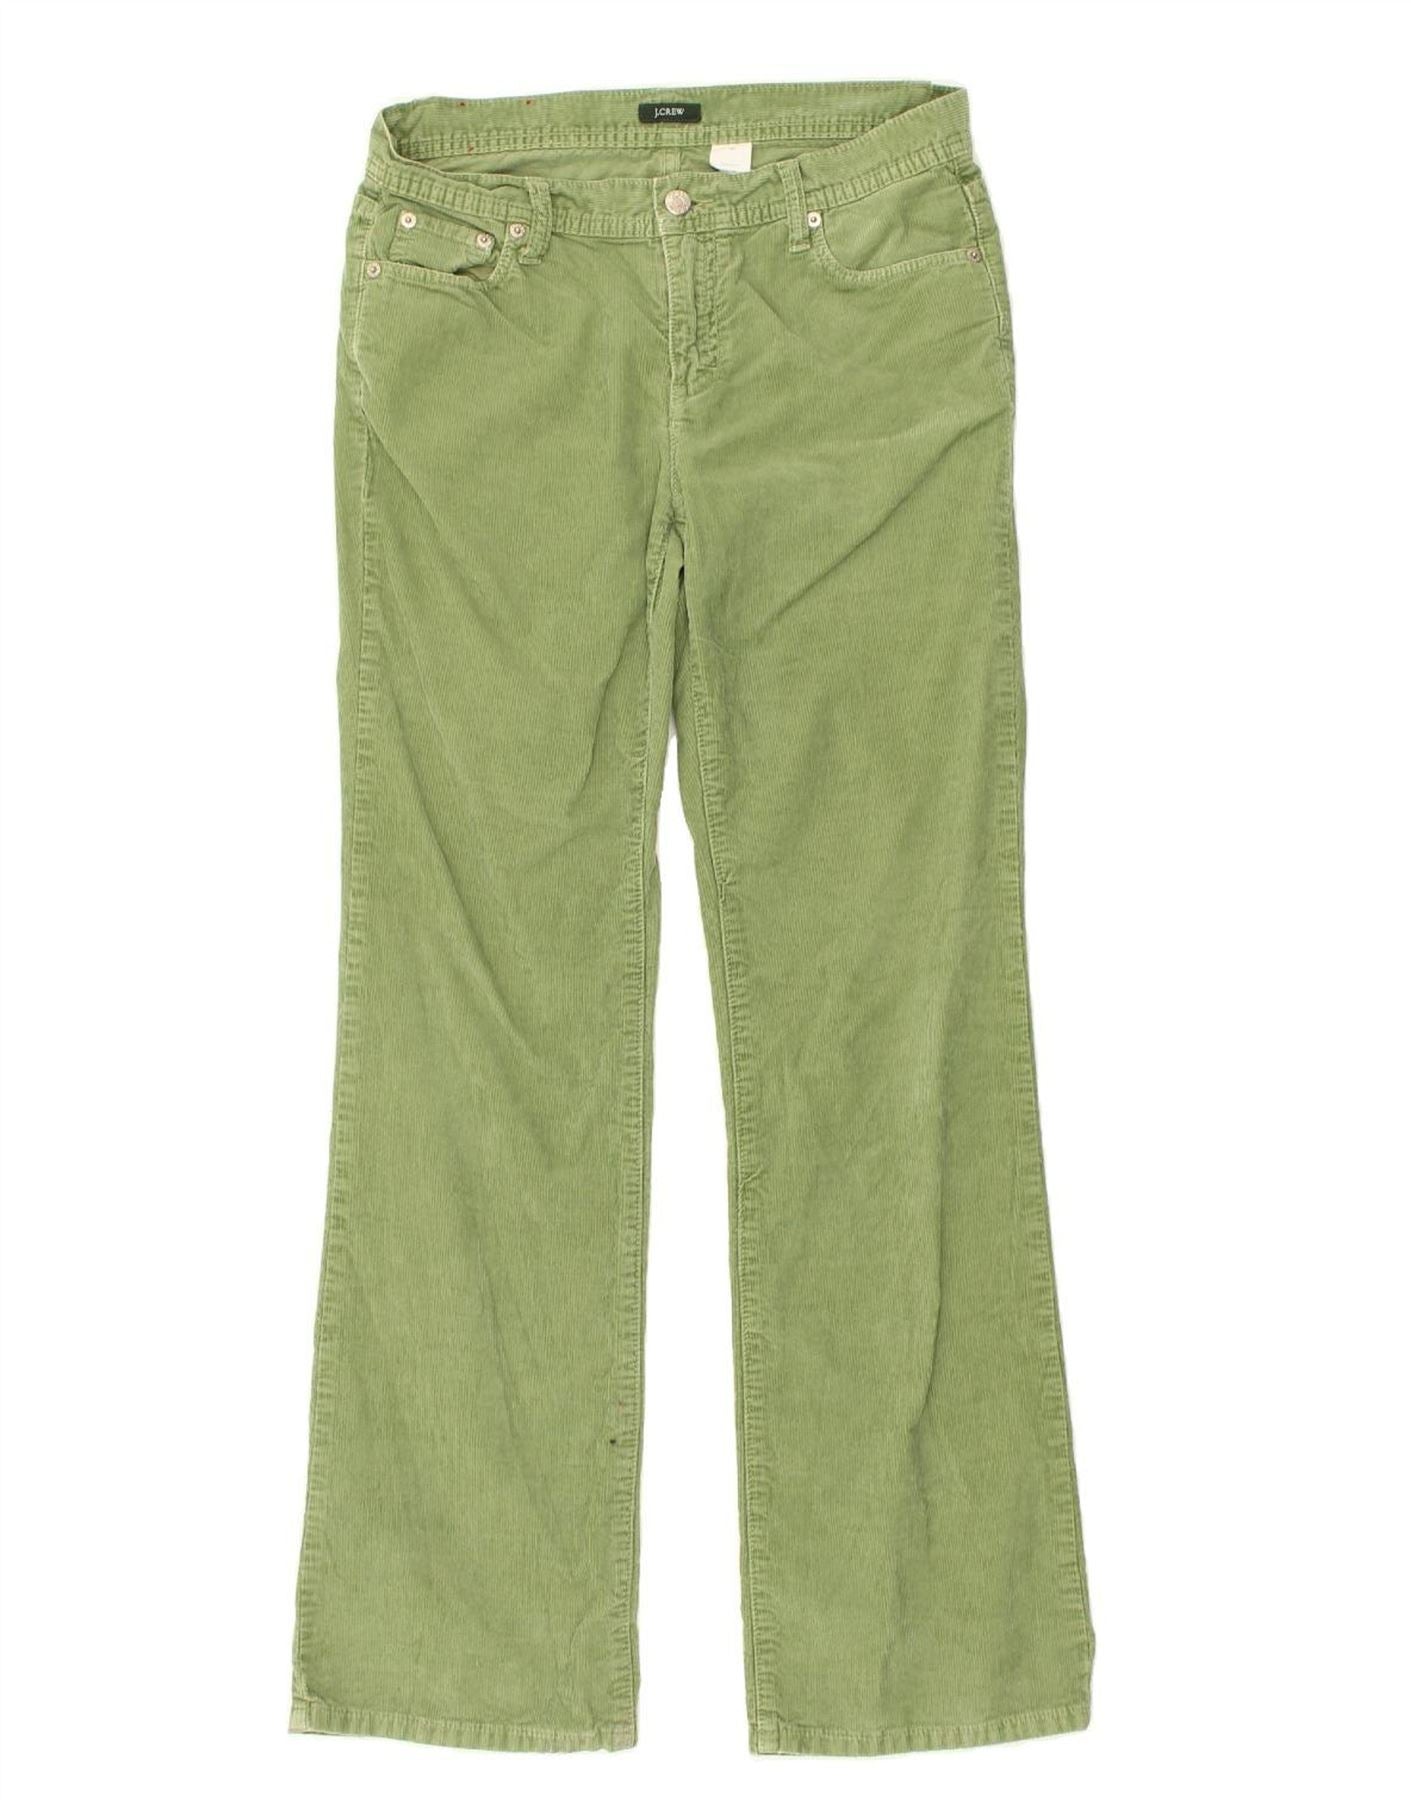 J. CREW Womens Bootcut Corduroy Trousers US 4 Small W30 L30 Green